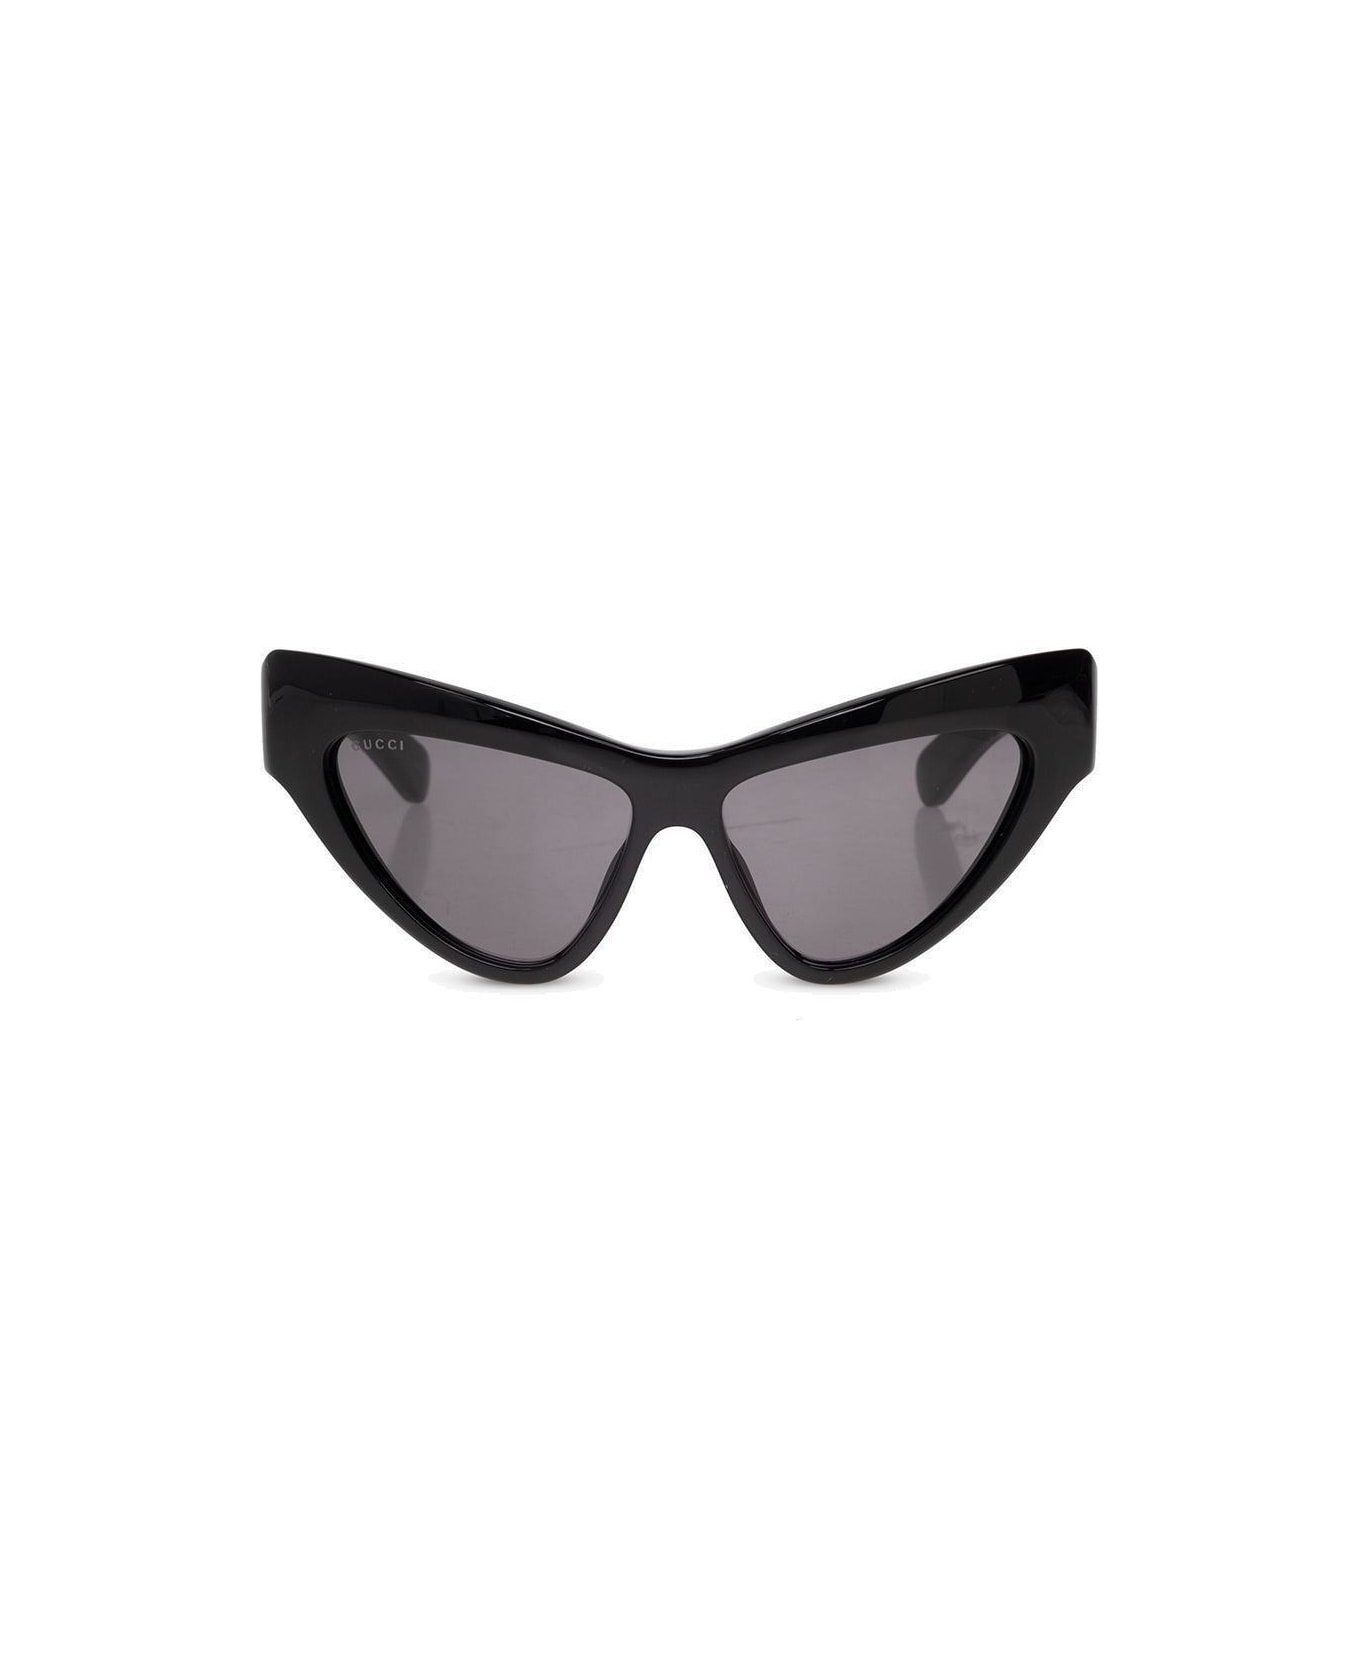 Gucci Eyewear Alien Framed Sunglasses